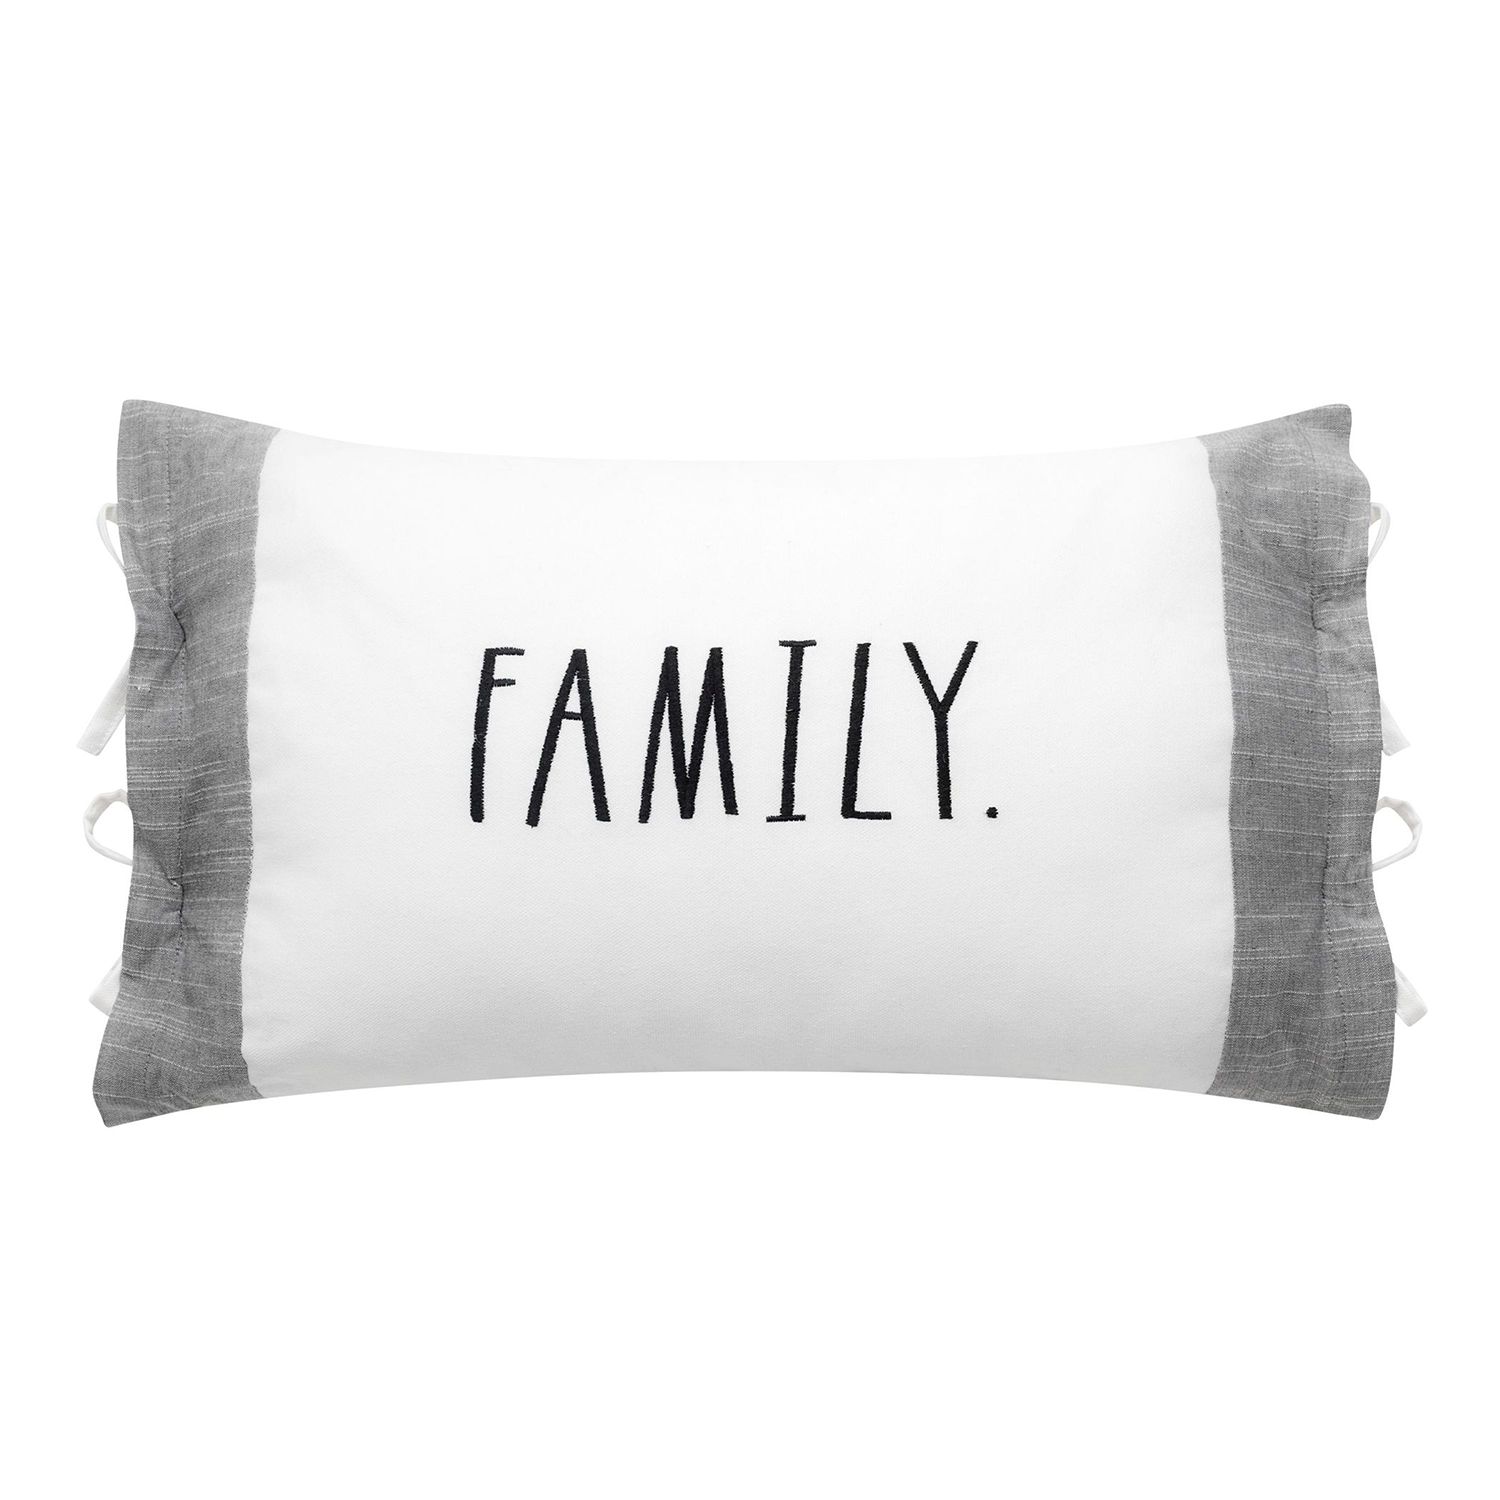 rae dunn family pillow